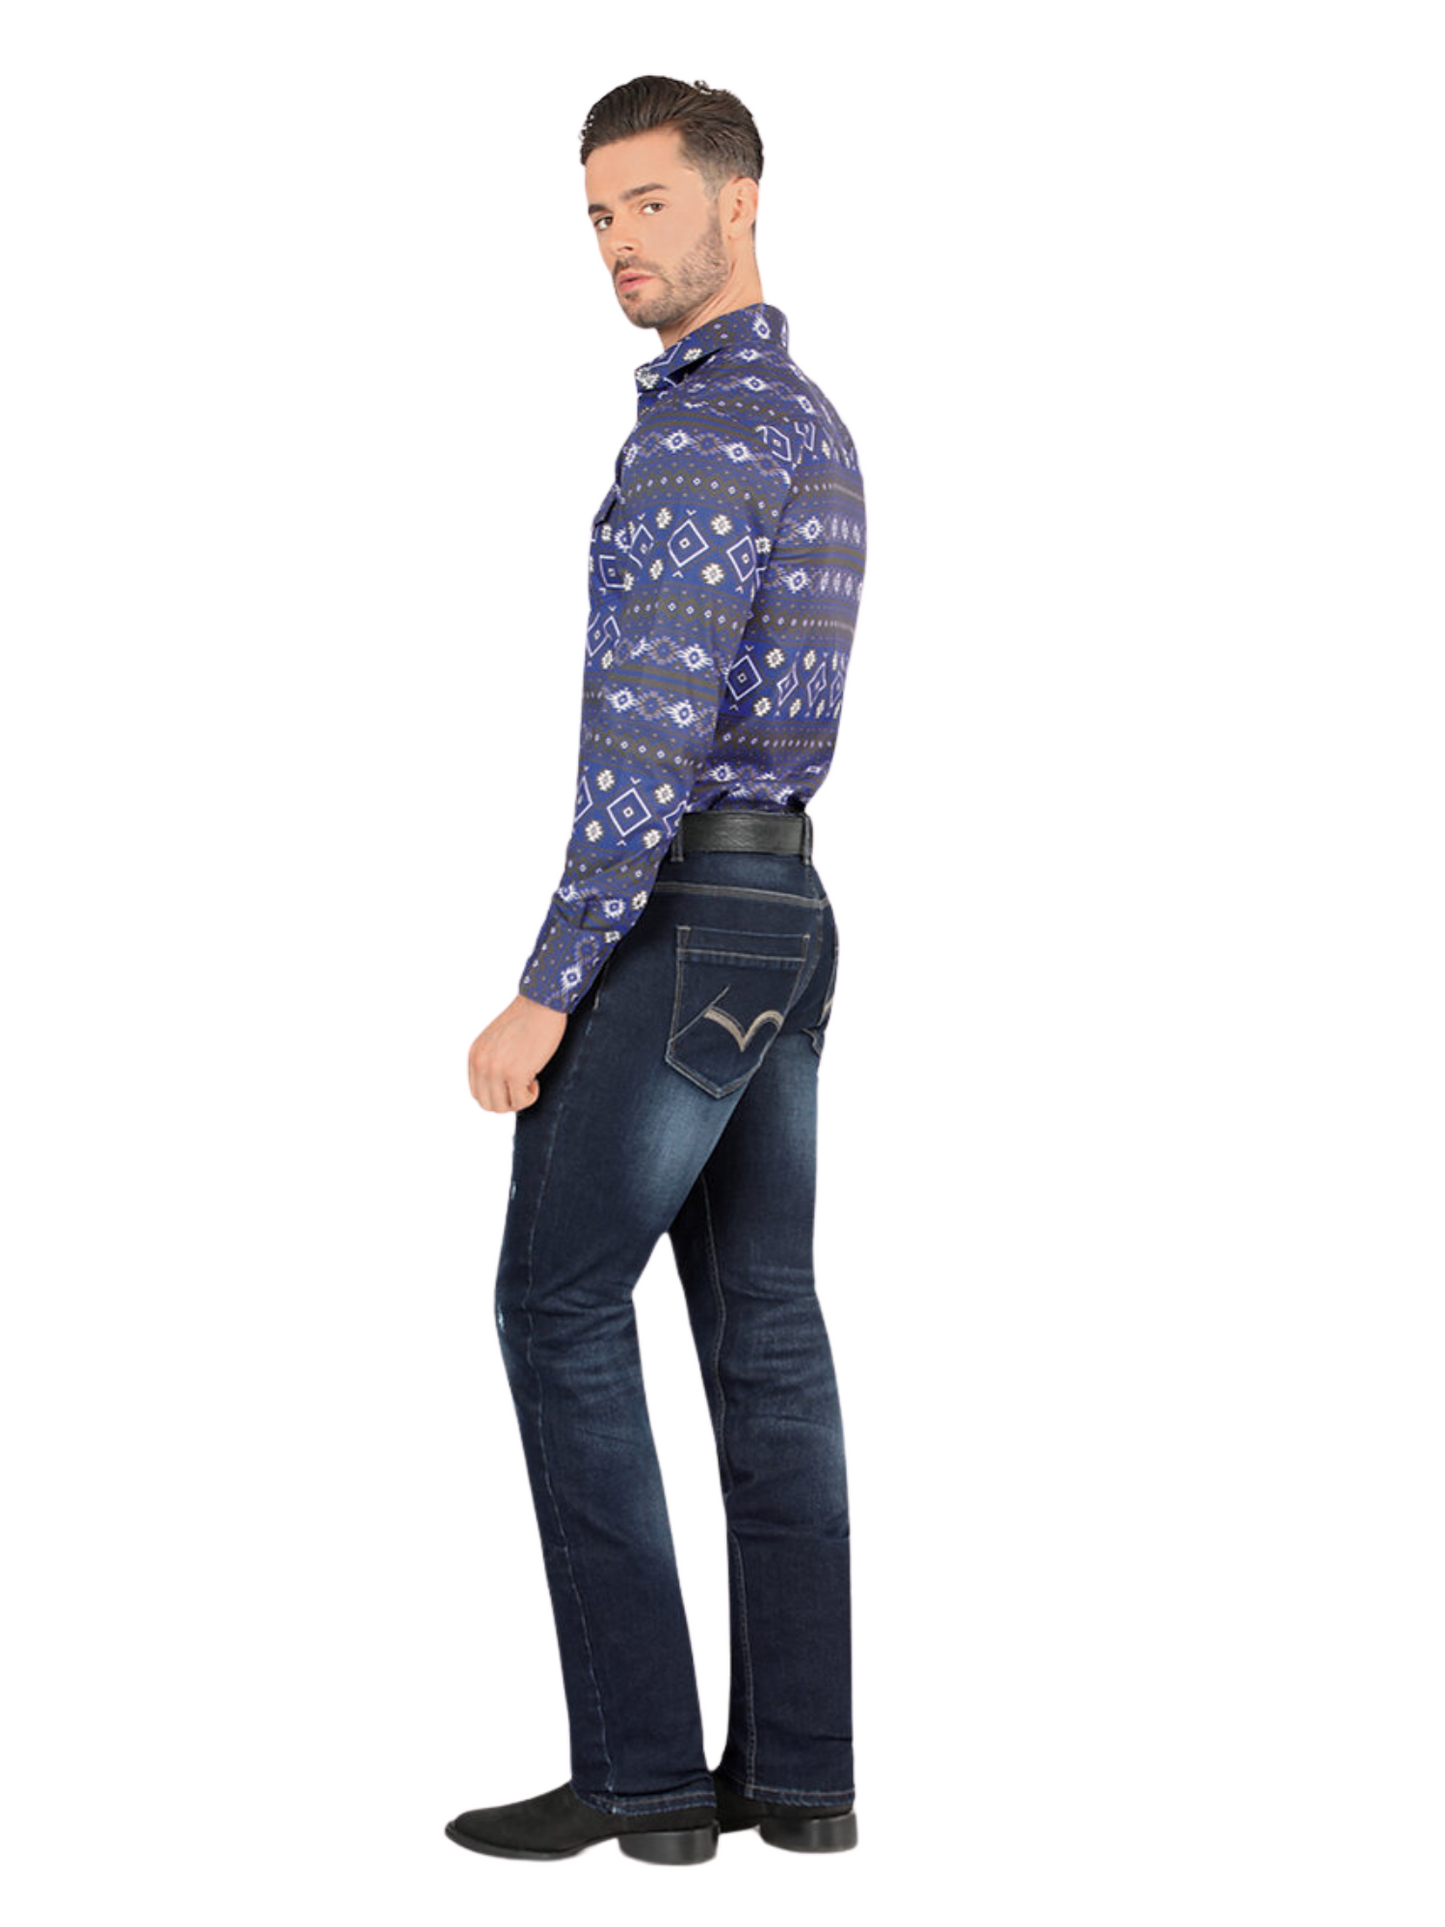 Stretch Denim Jeans for Men 'Montero' - ID: 5306 Denim Jeans Montero